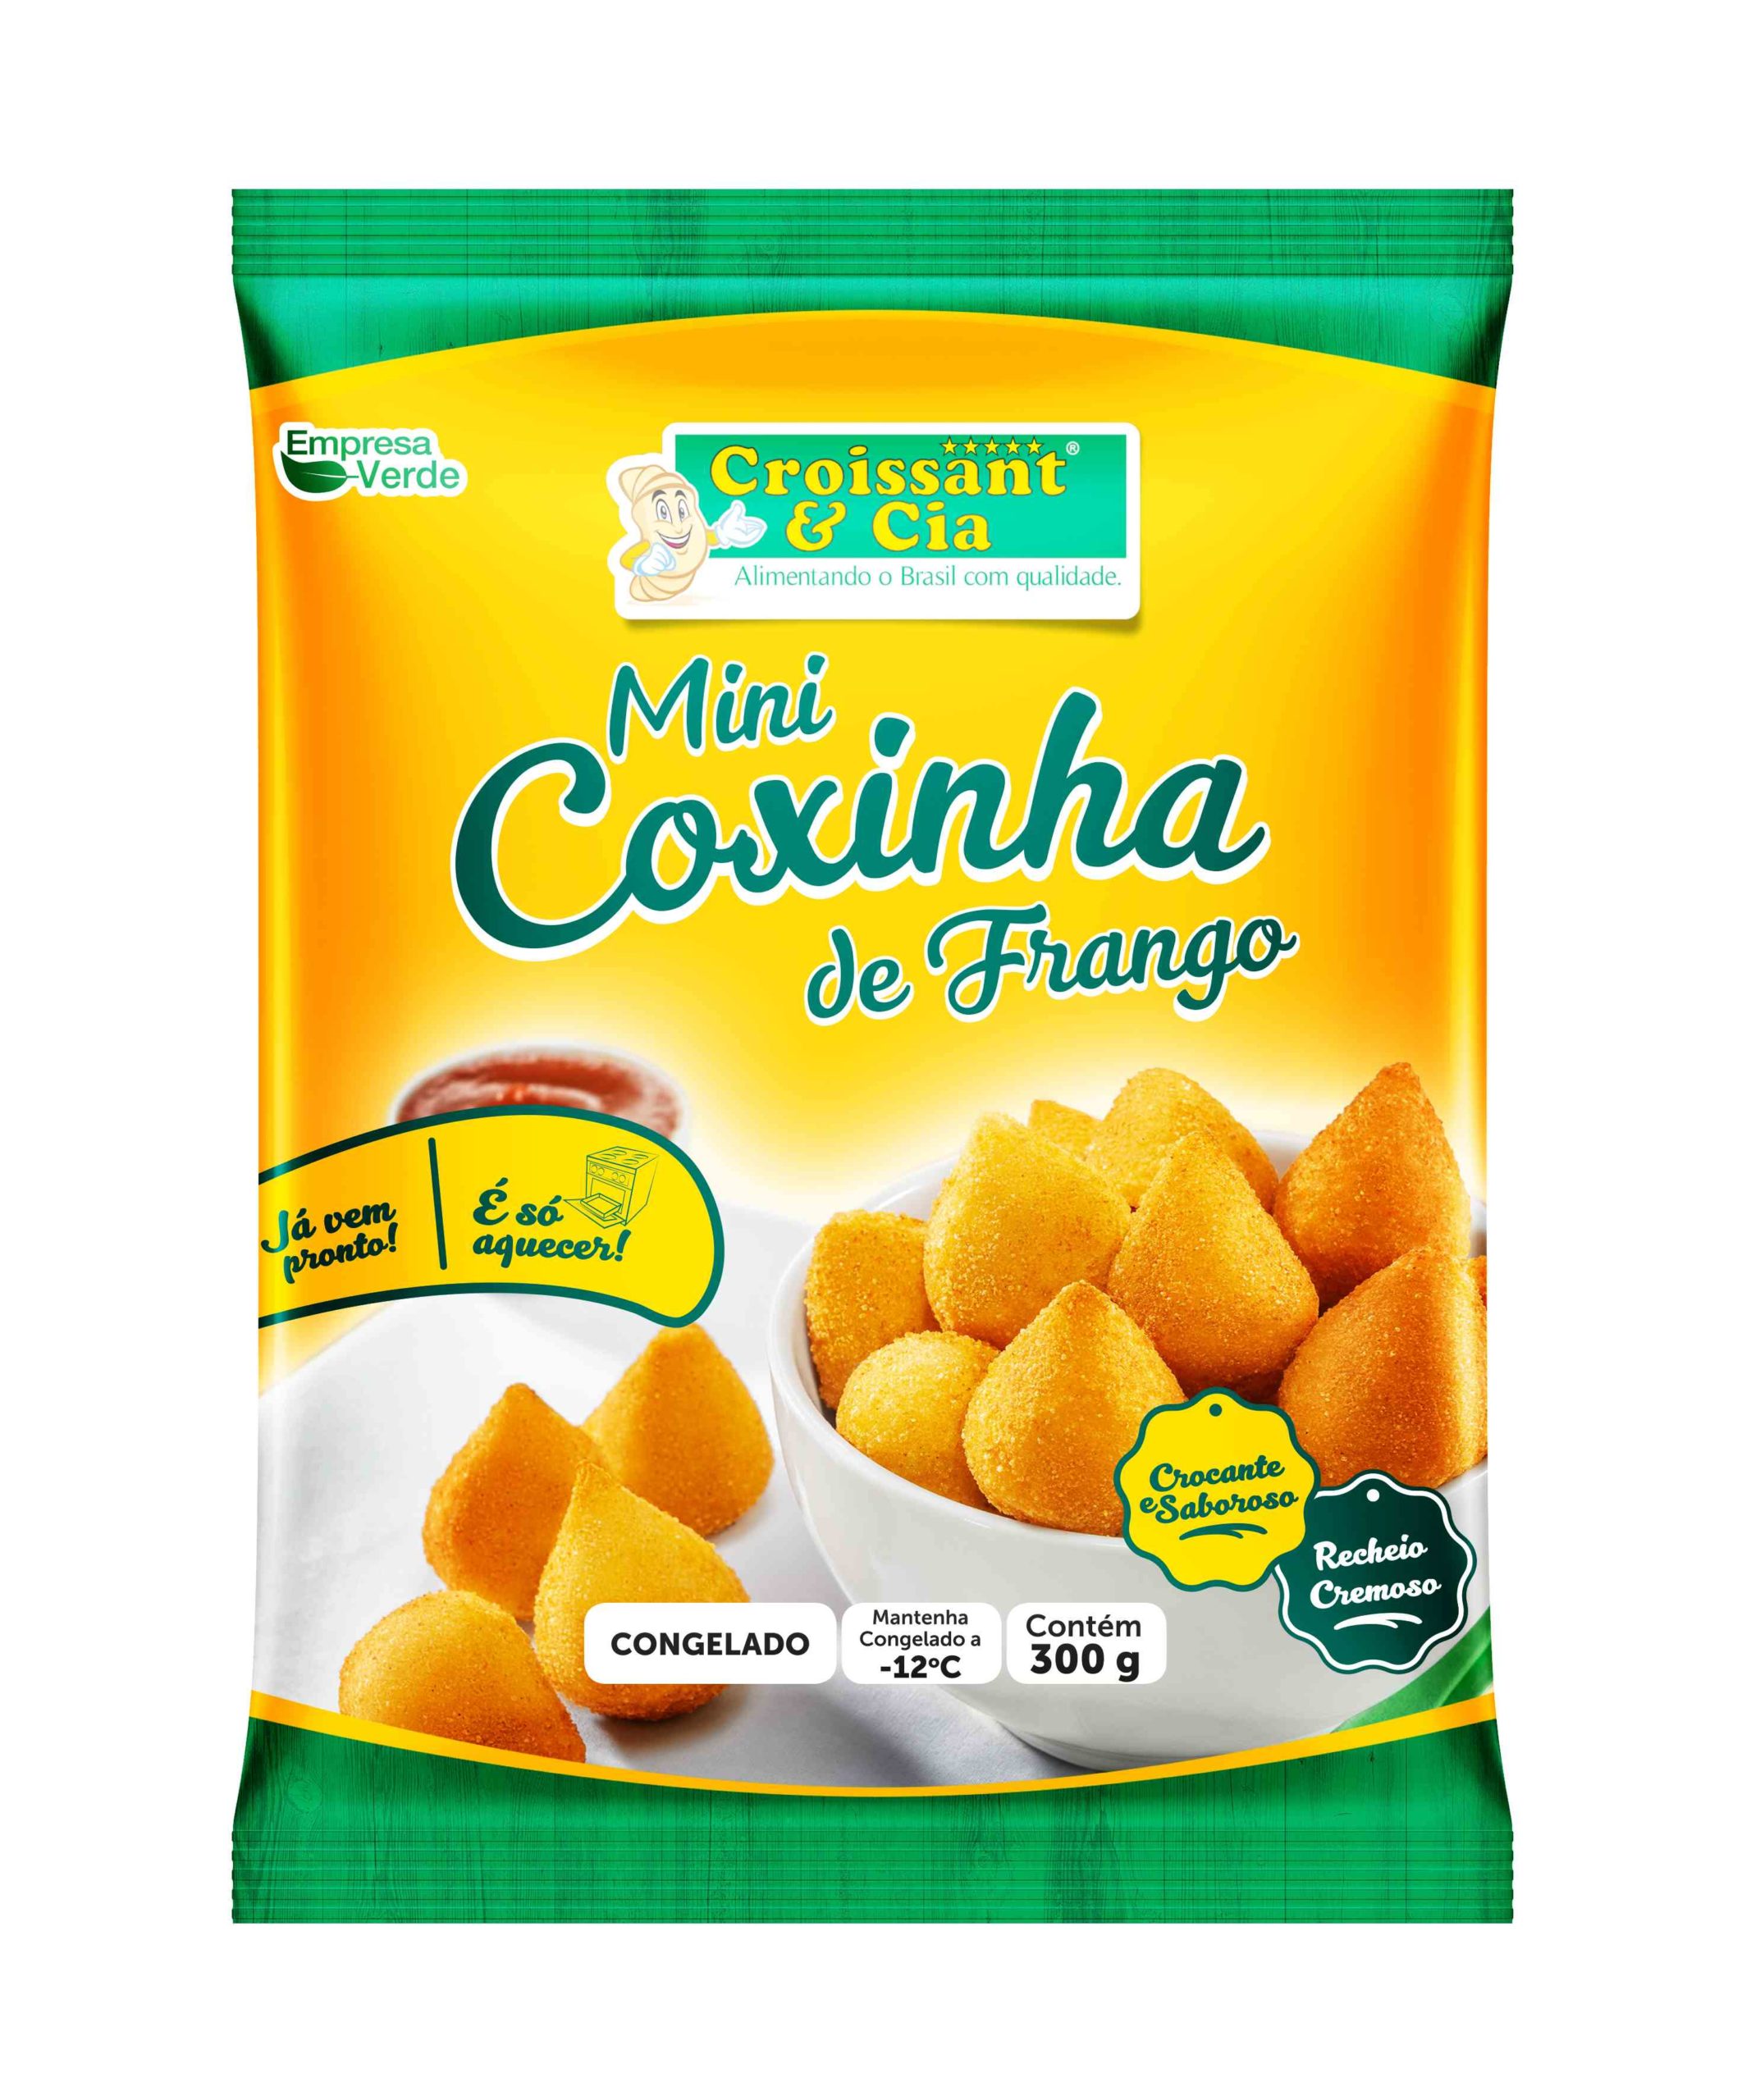 Mini Coxinha Magisfood Croissant & Cia